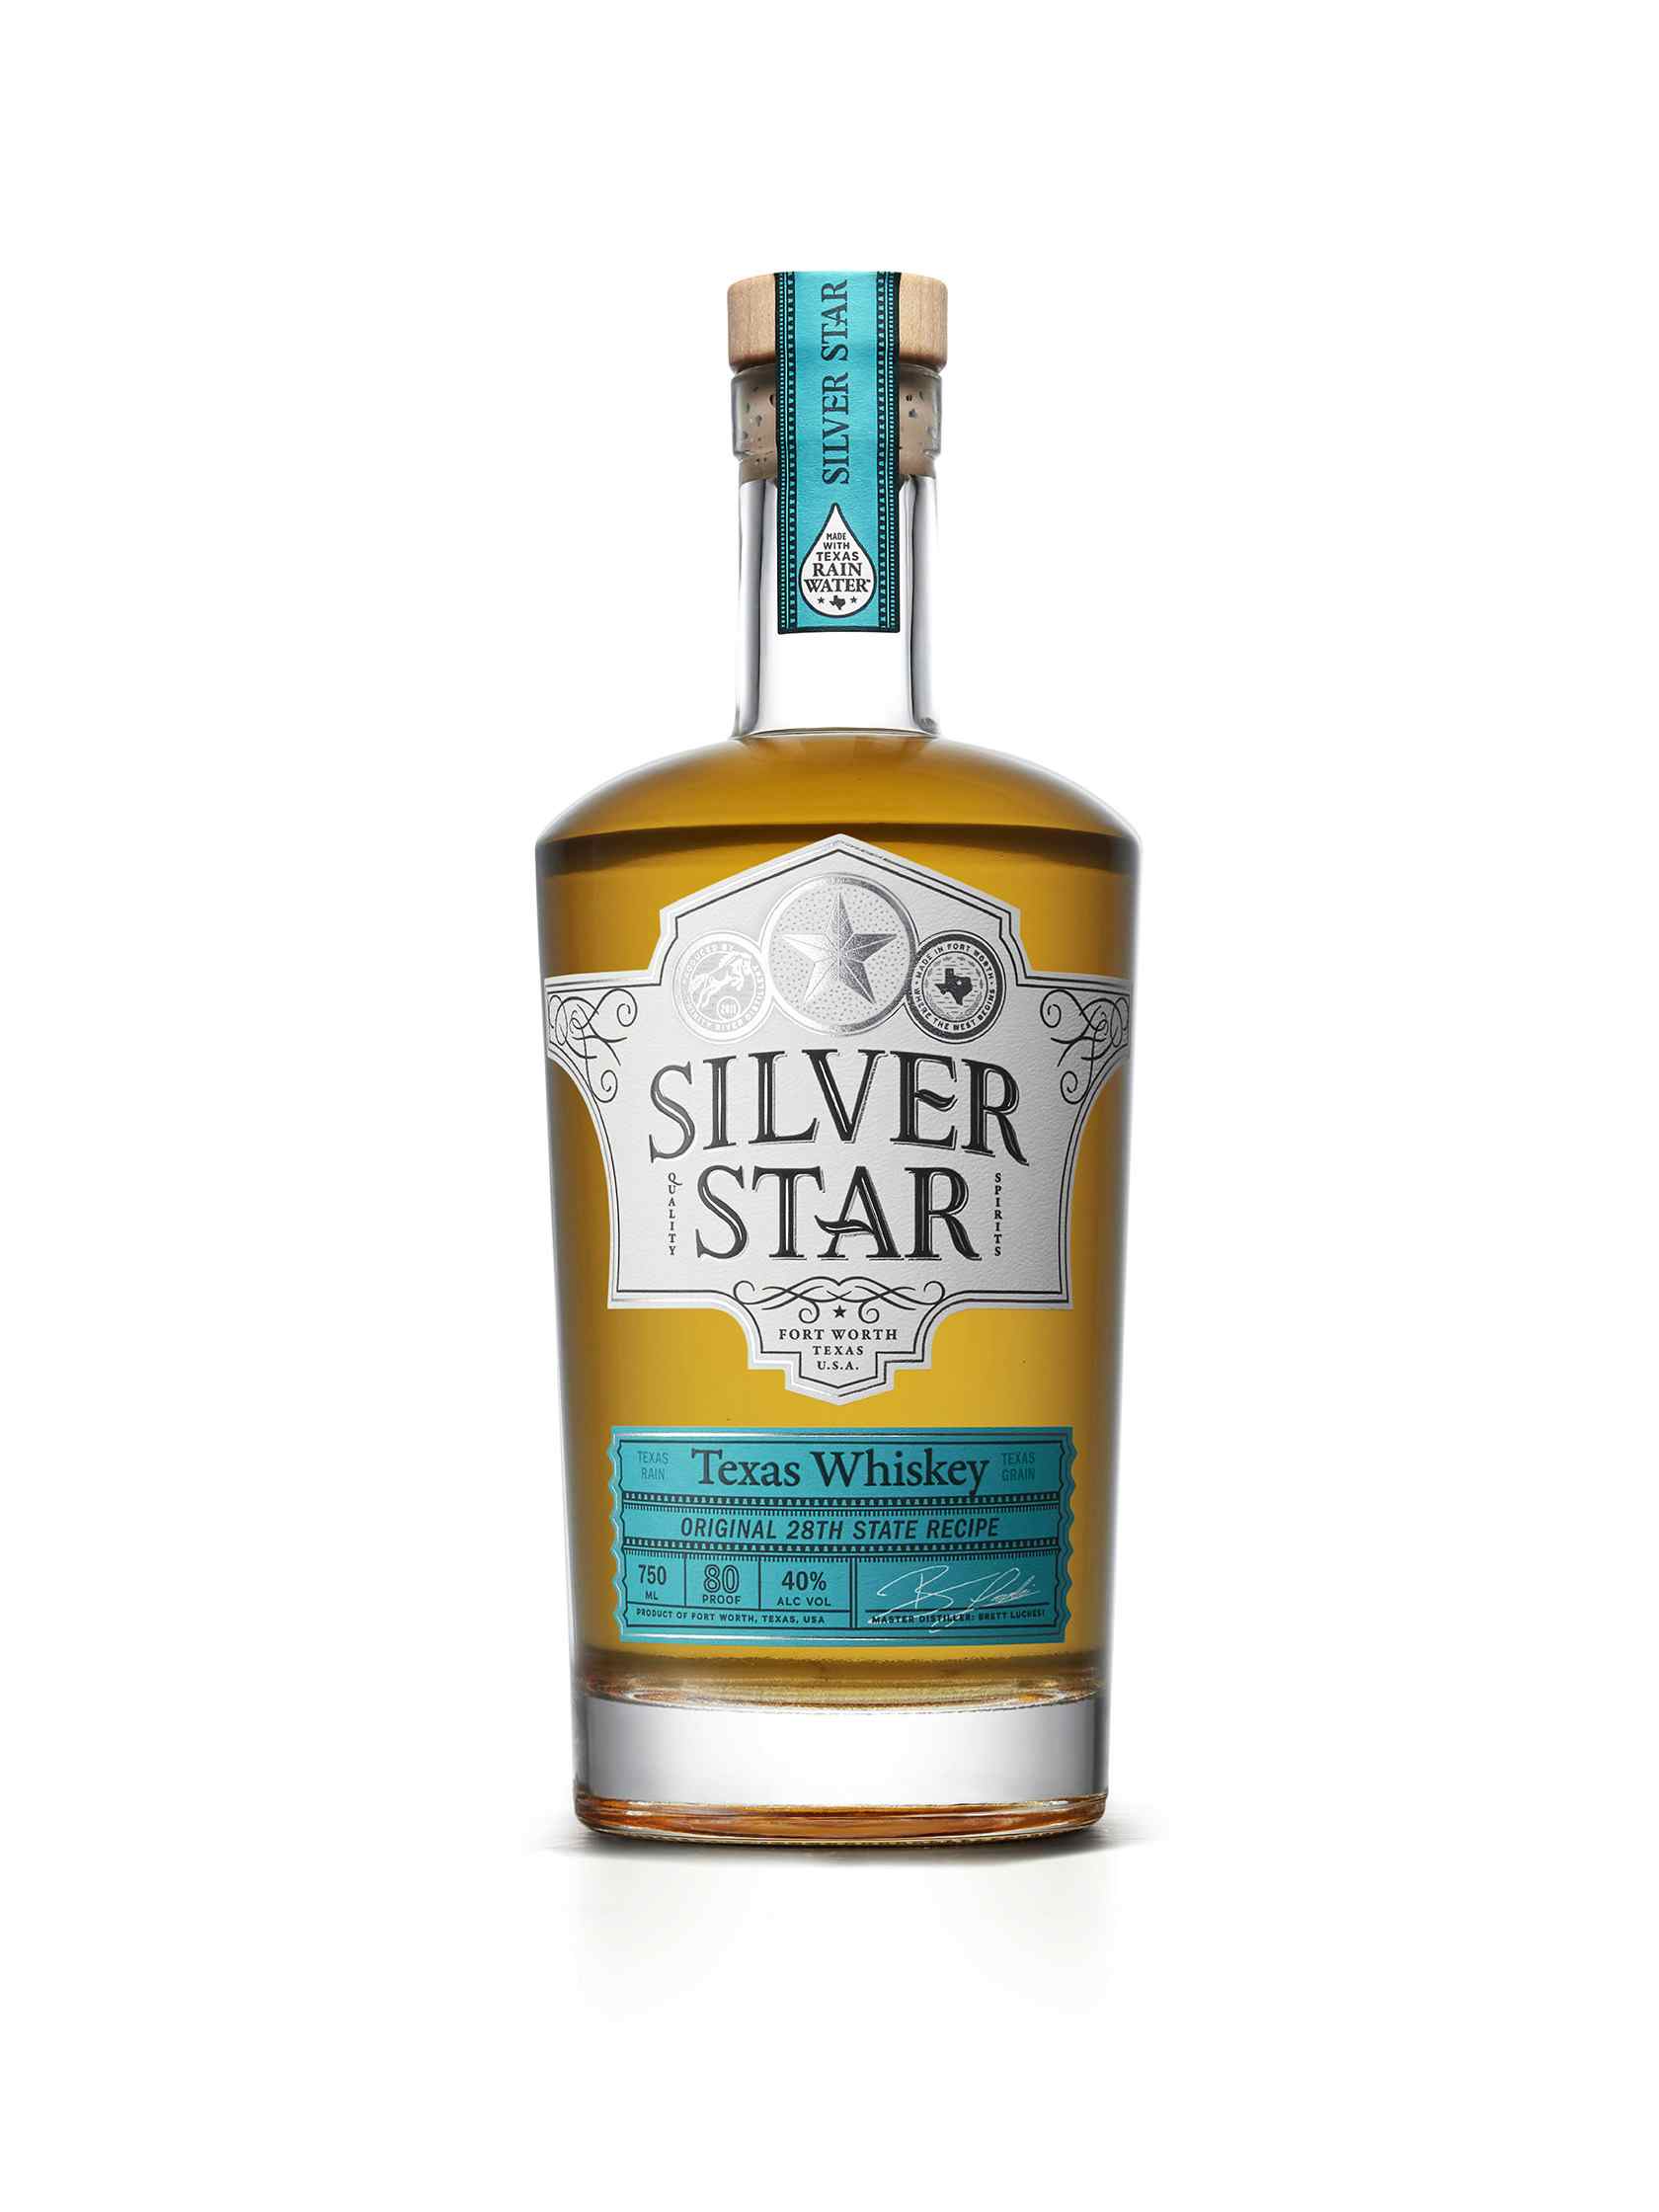 Silver Star Whiskey